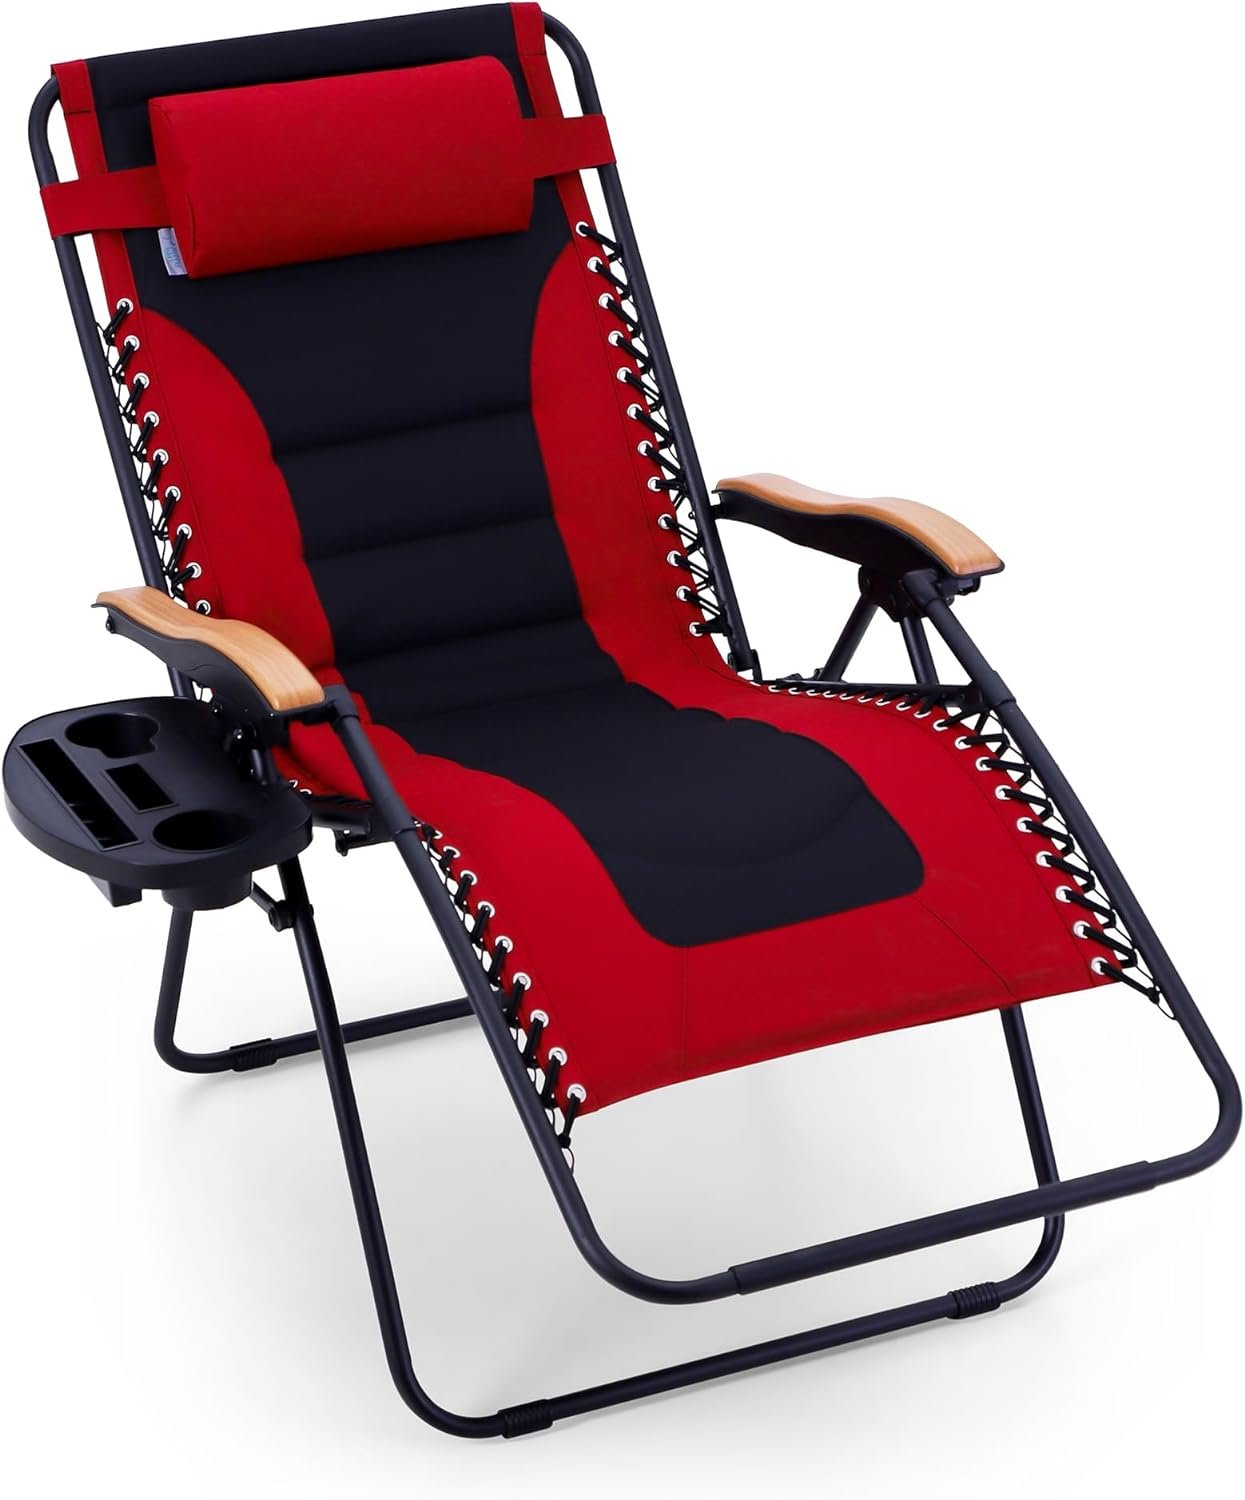 PHI VILLA Oversize XL Padded Zero Gravity Lounge Chair Review